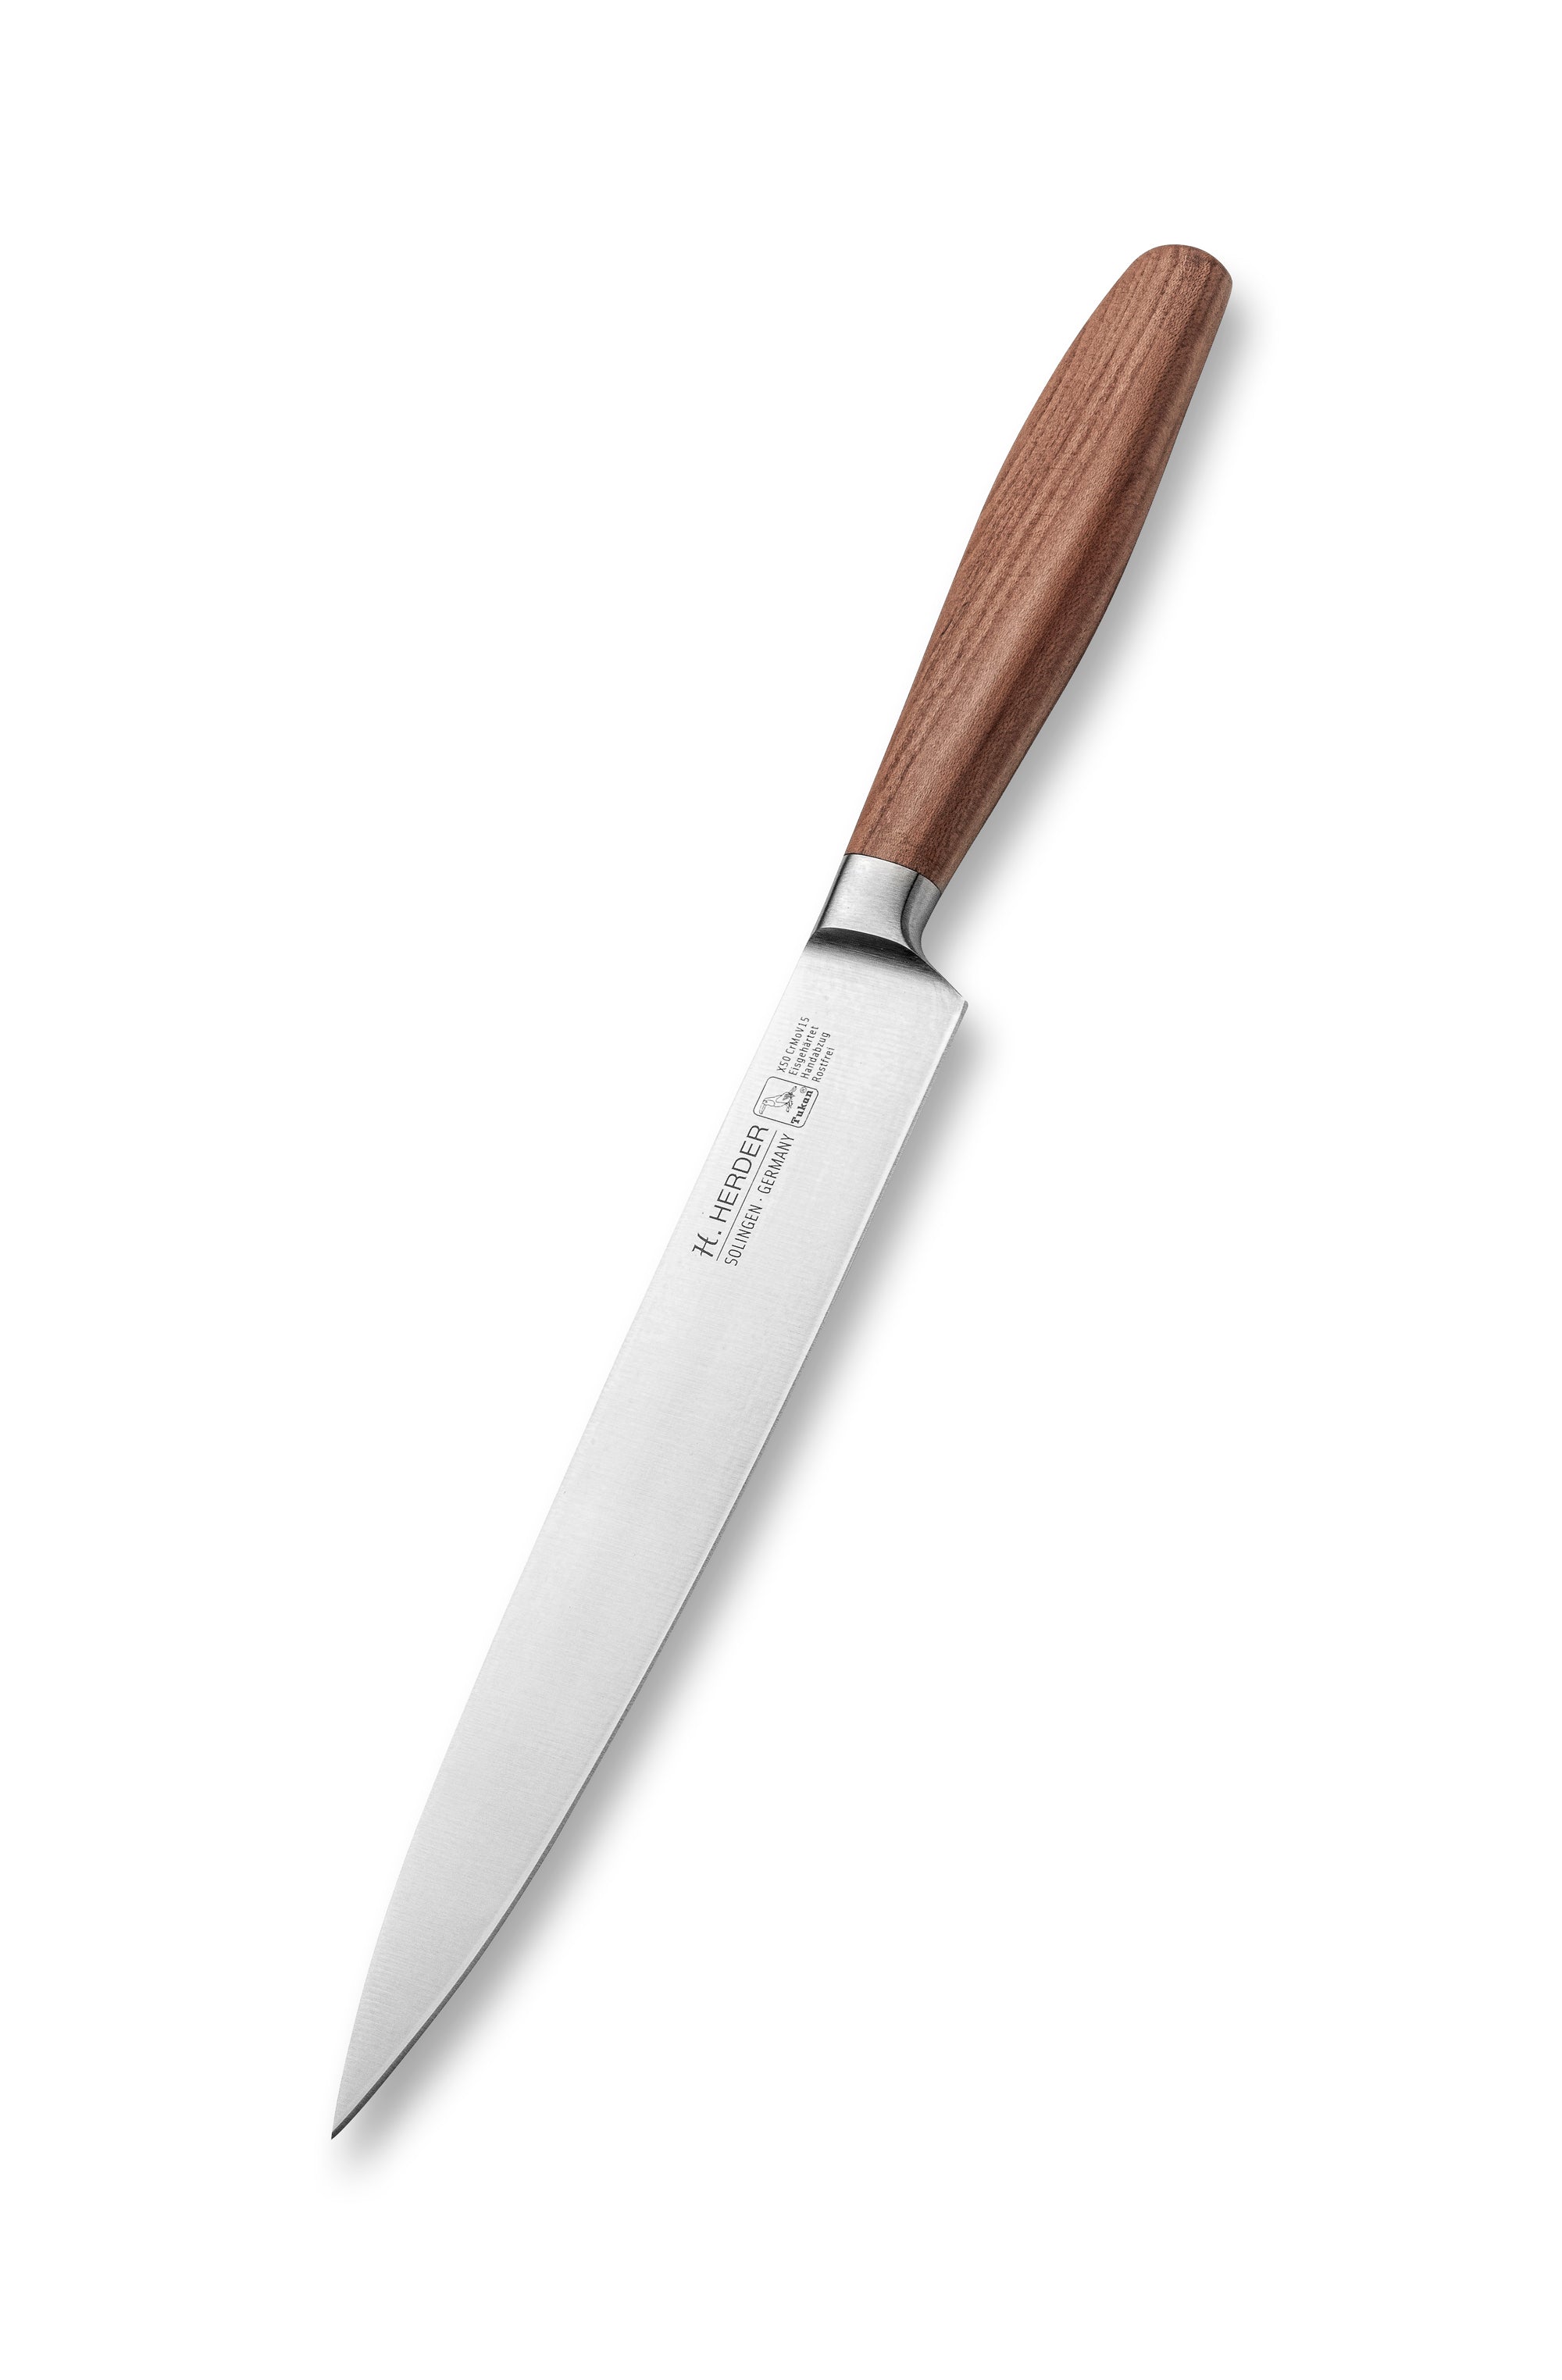 Ham knife Eterno, plum wood, blade length 21cm, forged